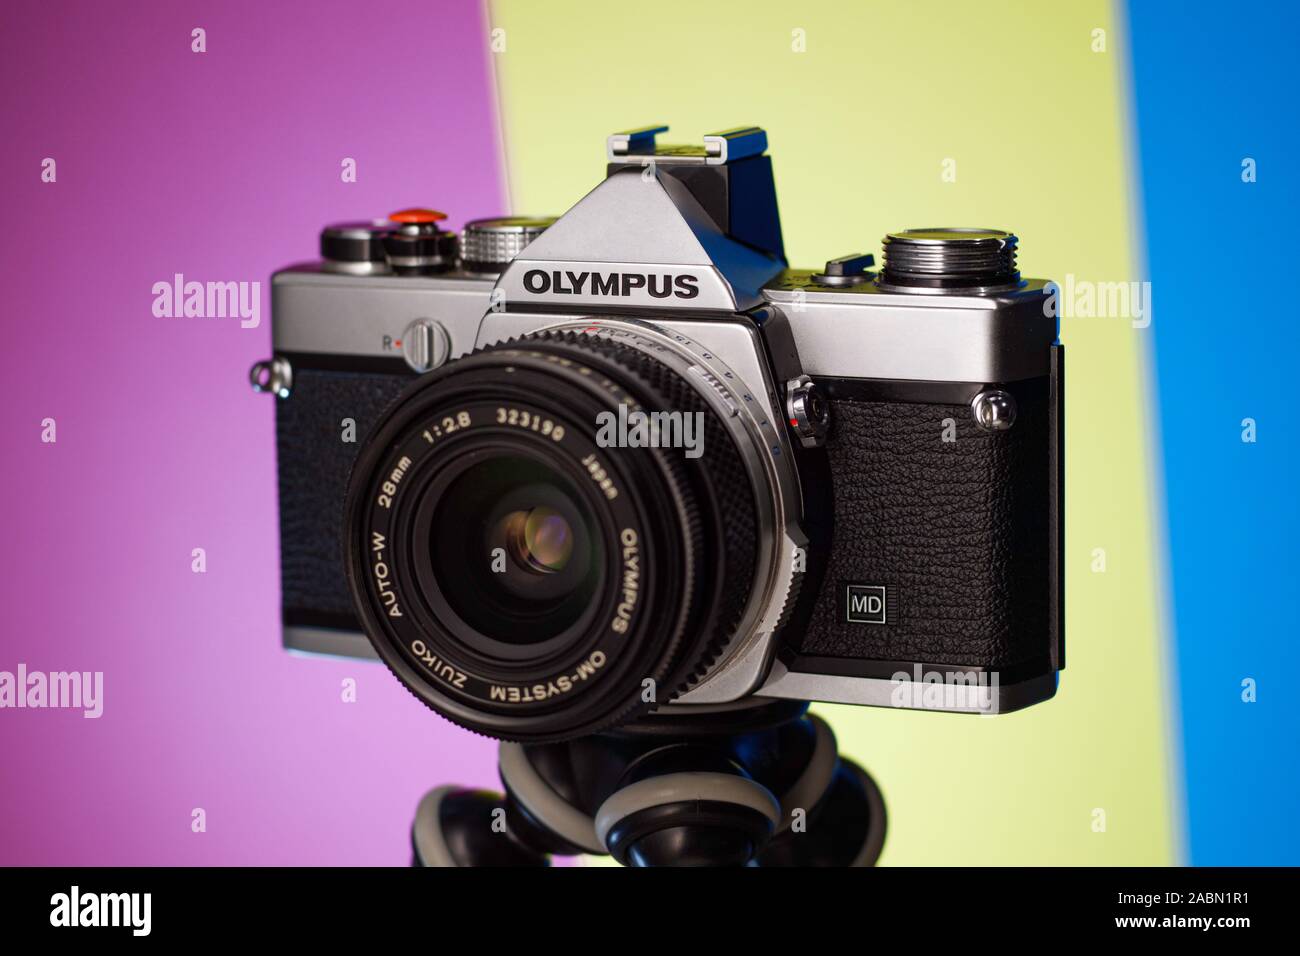 Olympus OM1 appareil photo avec fond multicolore Banque D'Images